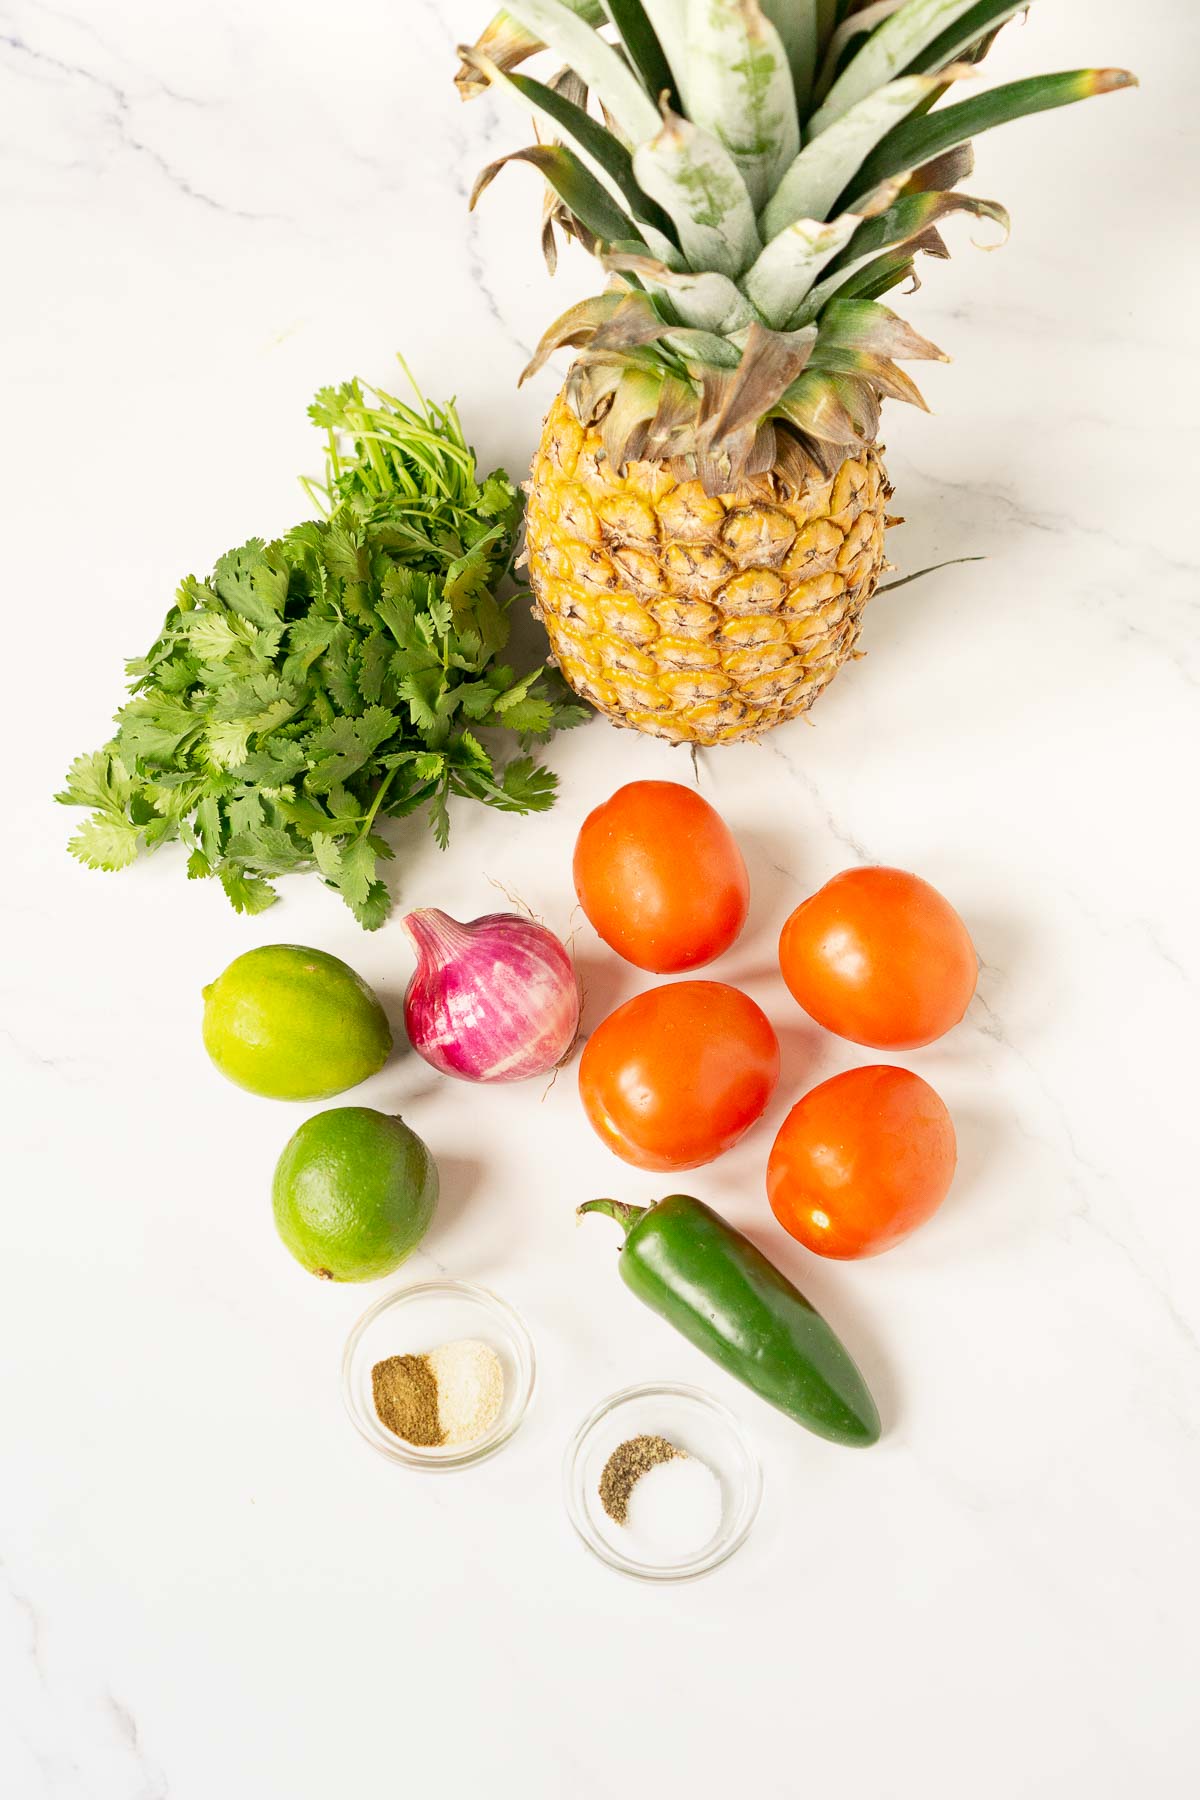 Ingredients for pineapple pico de gallo